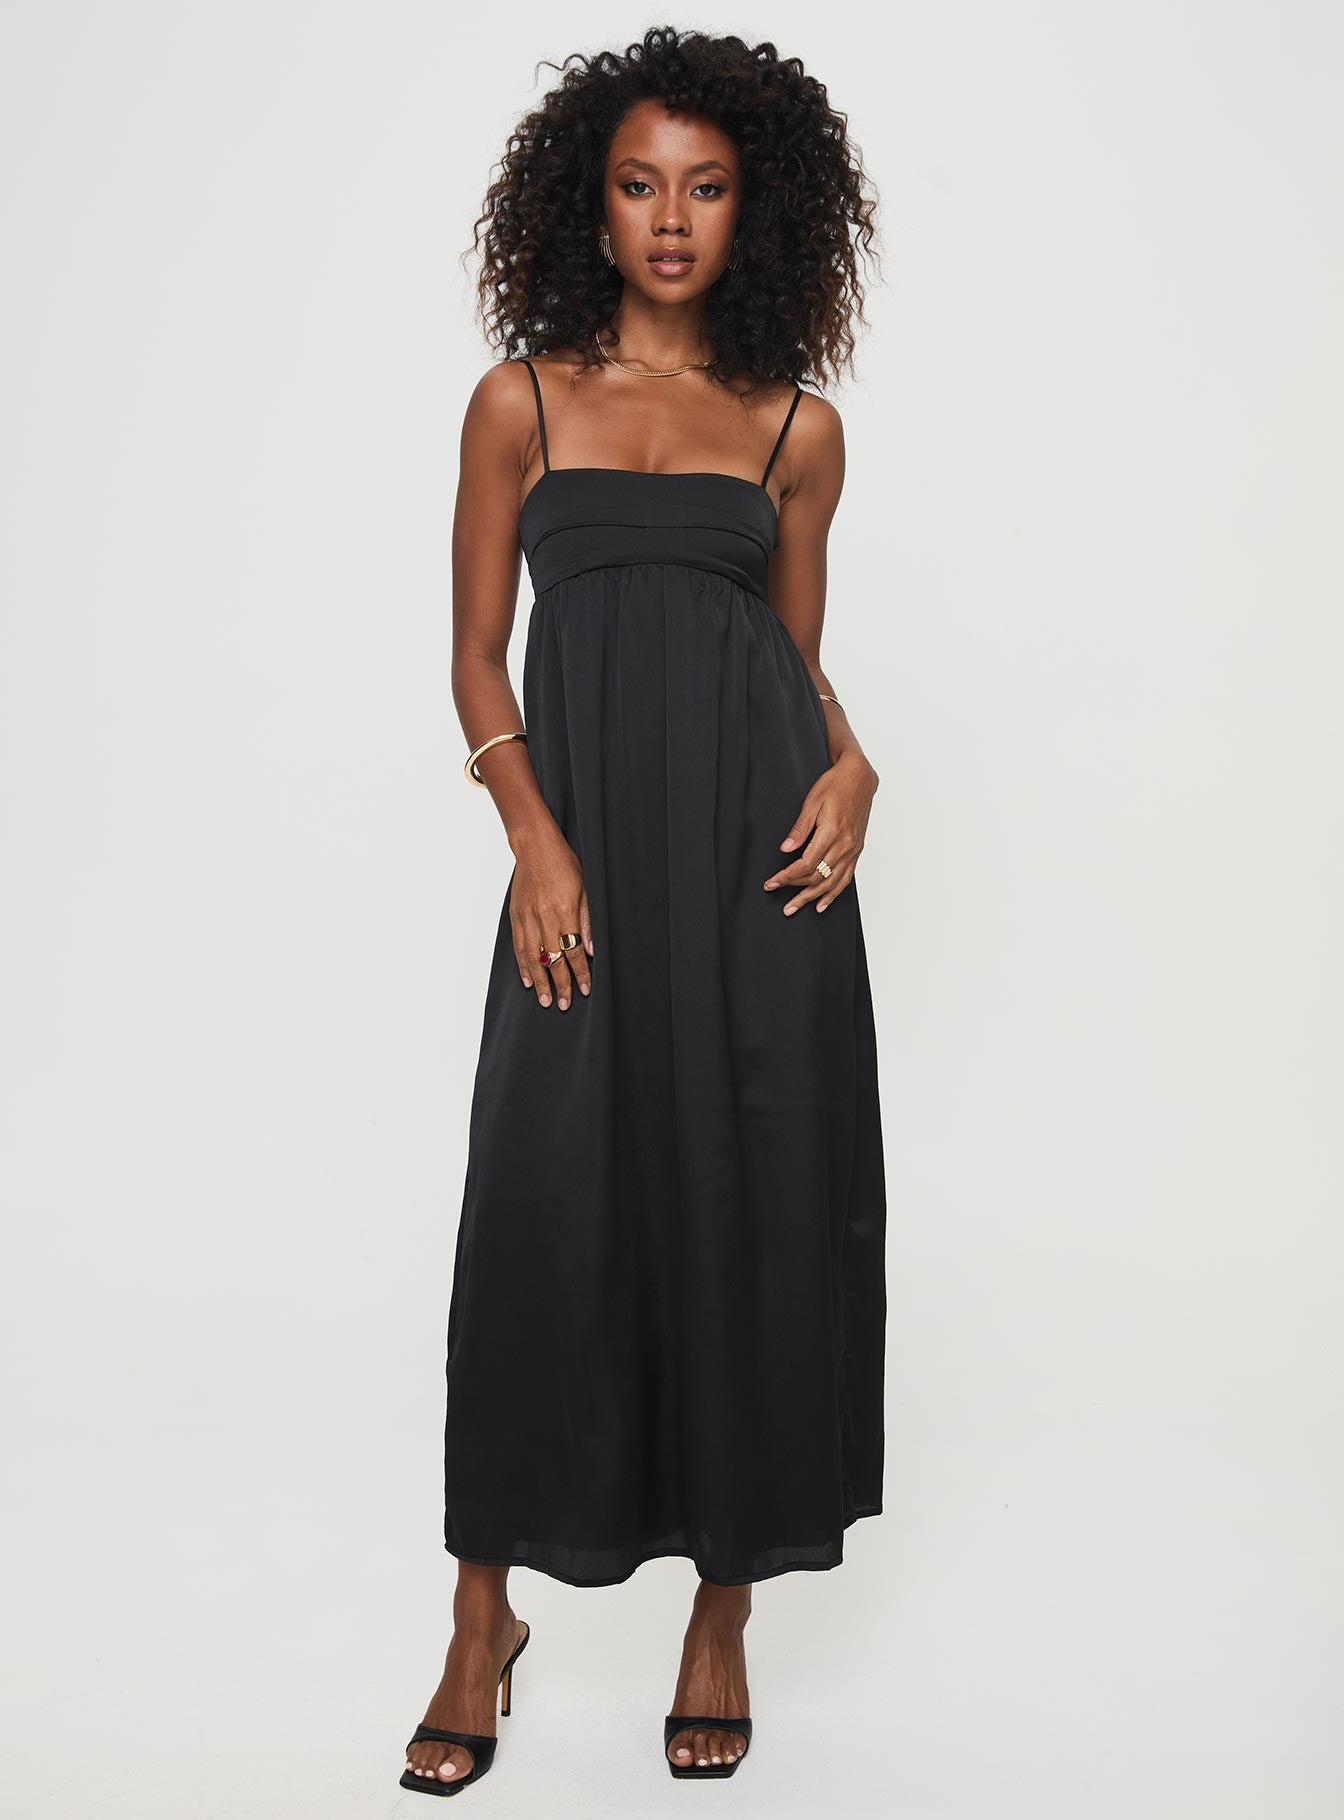 Shop Formal Dress - Ortega Maxi Dress Black fifth image